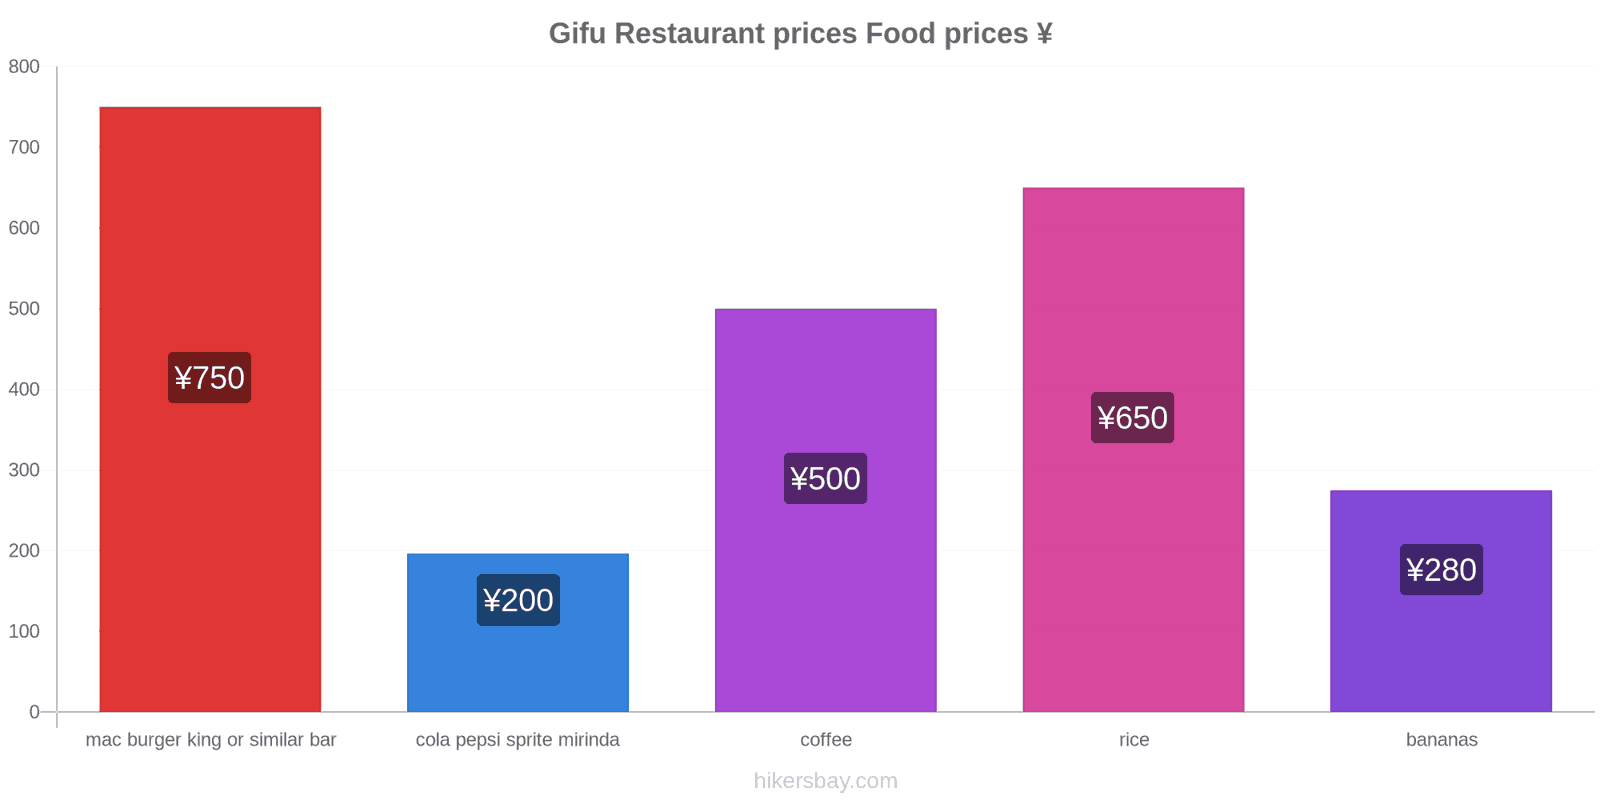 Gifu price changes hikersbay.com